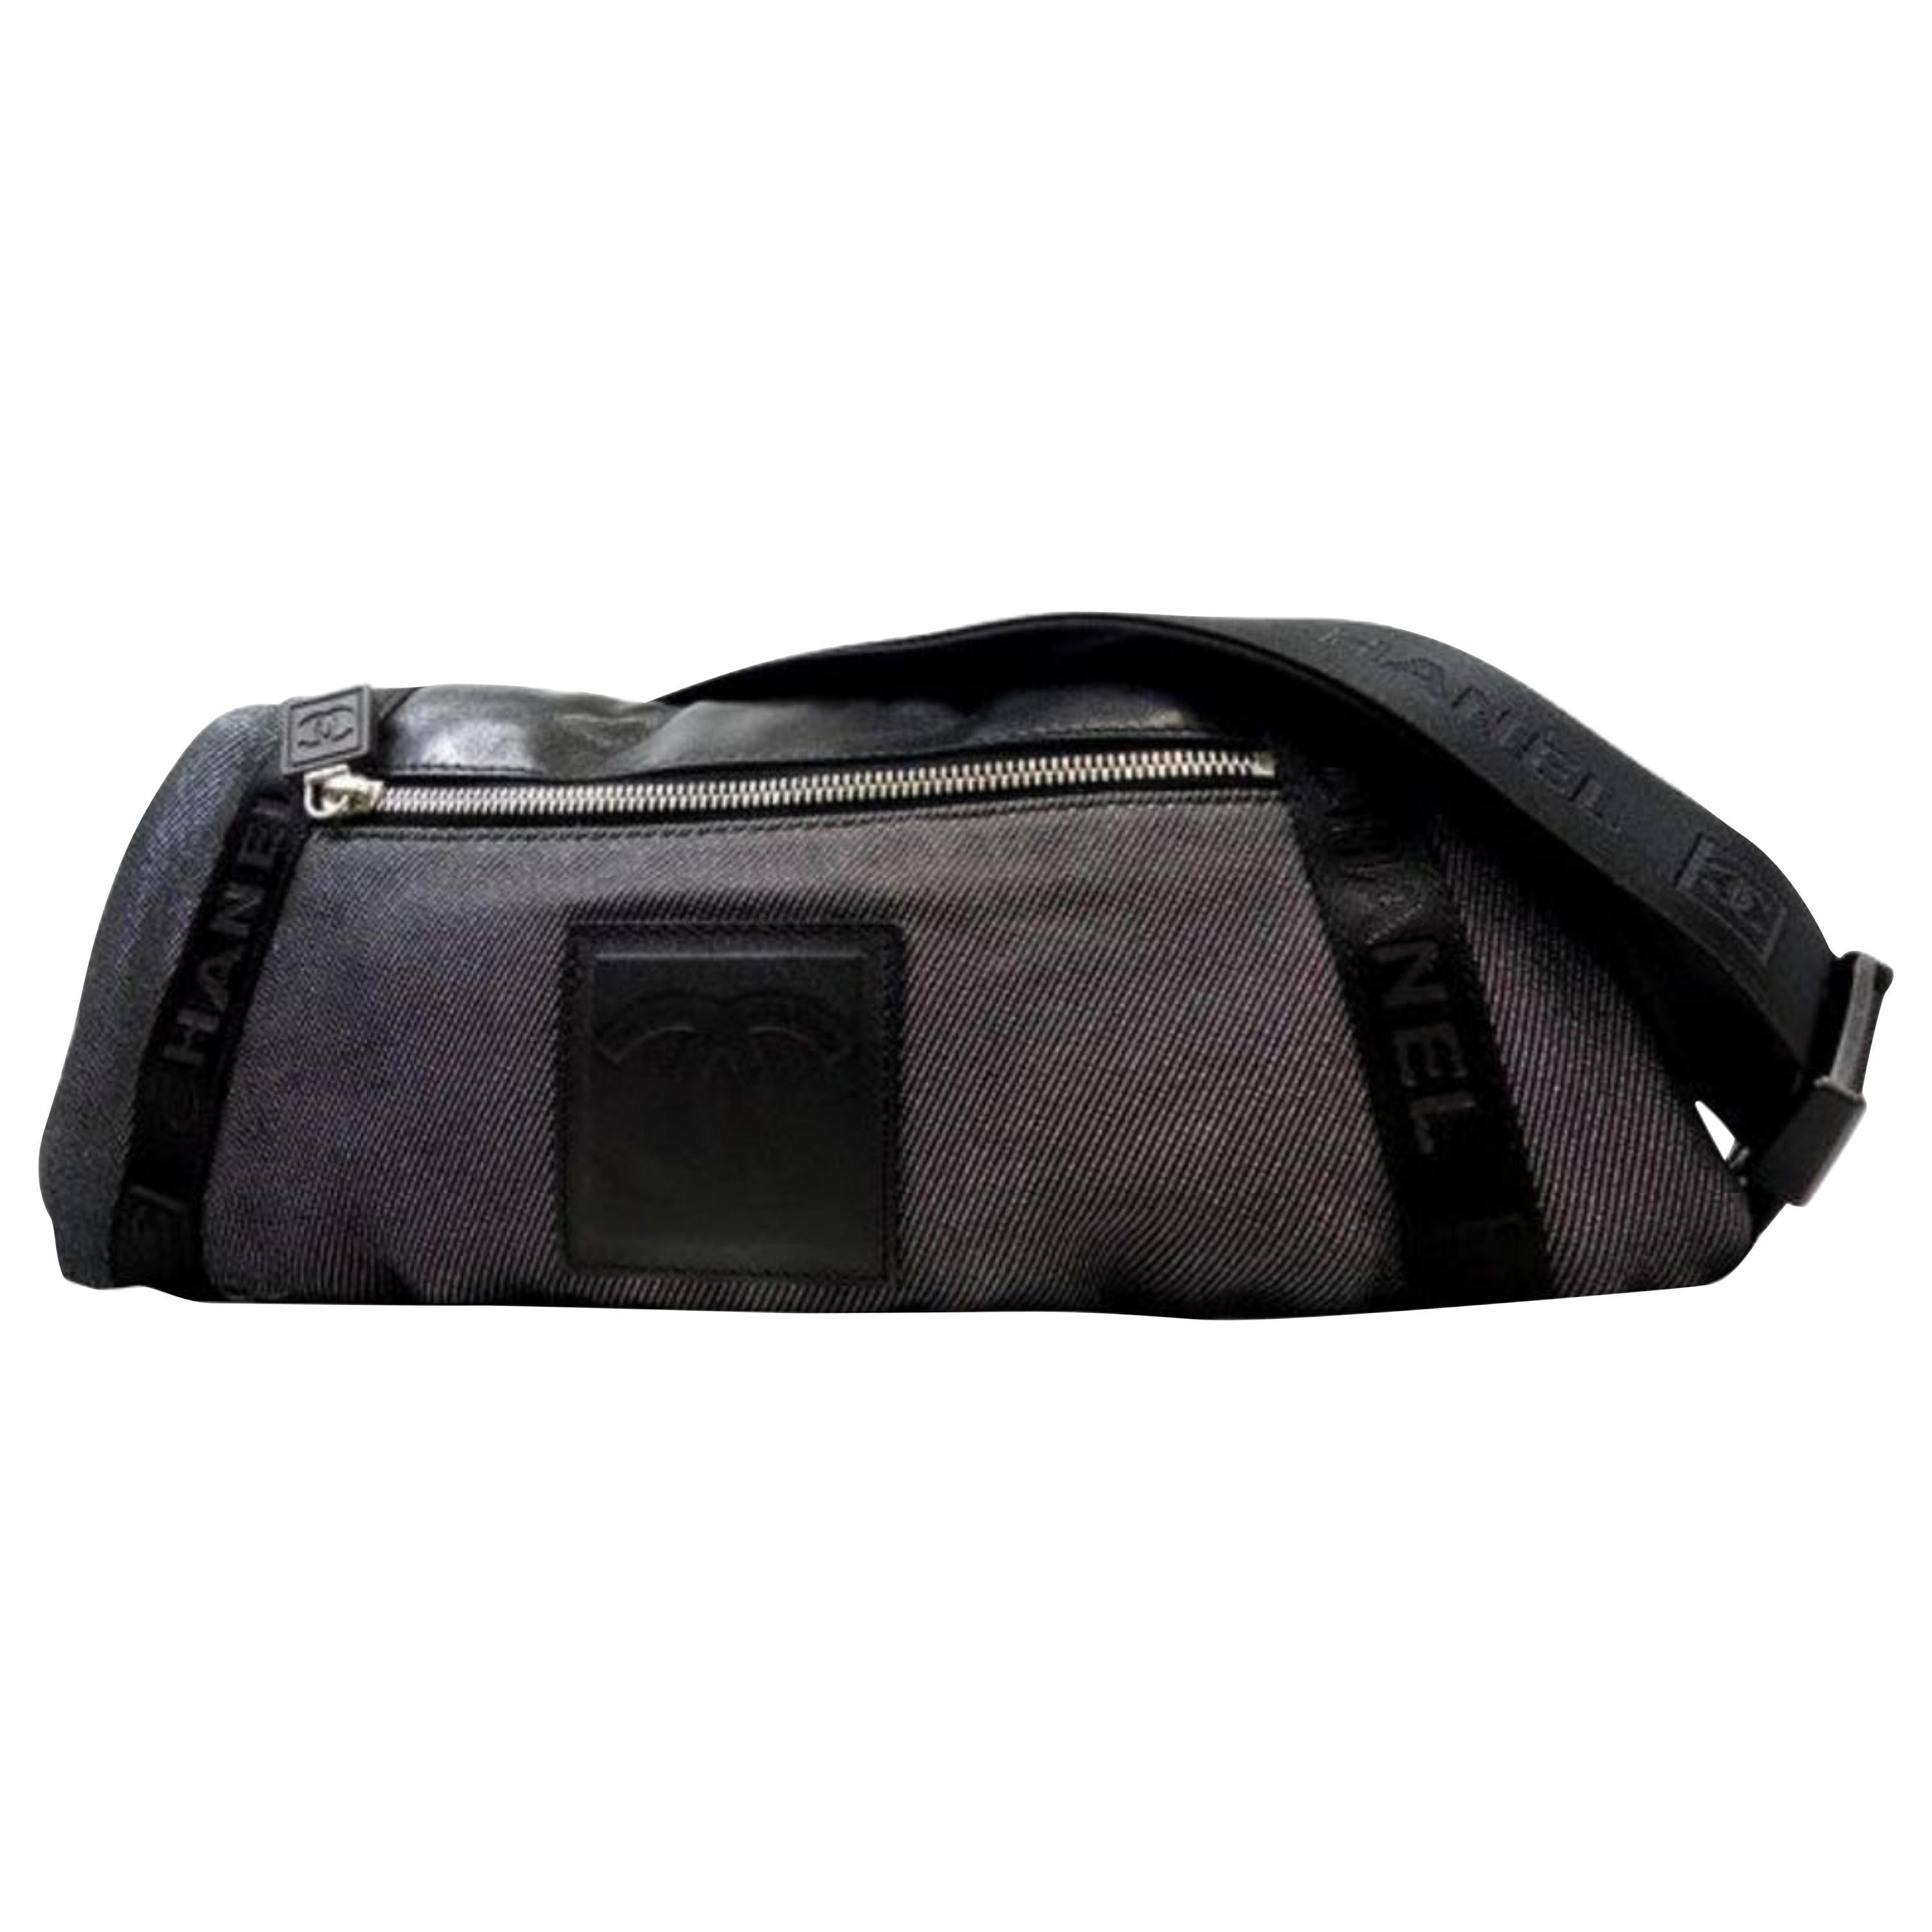 Chanel Waist Bag Cc Sports Fanny Pack 228165 Charcoal Coated Canvas Shoulder Bag For Sale